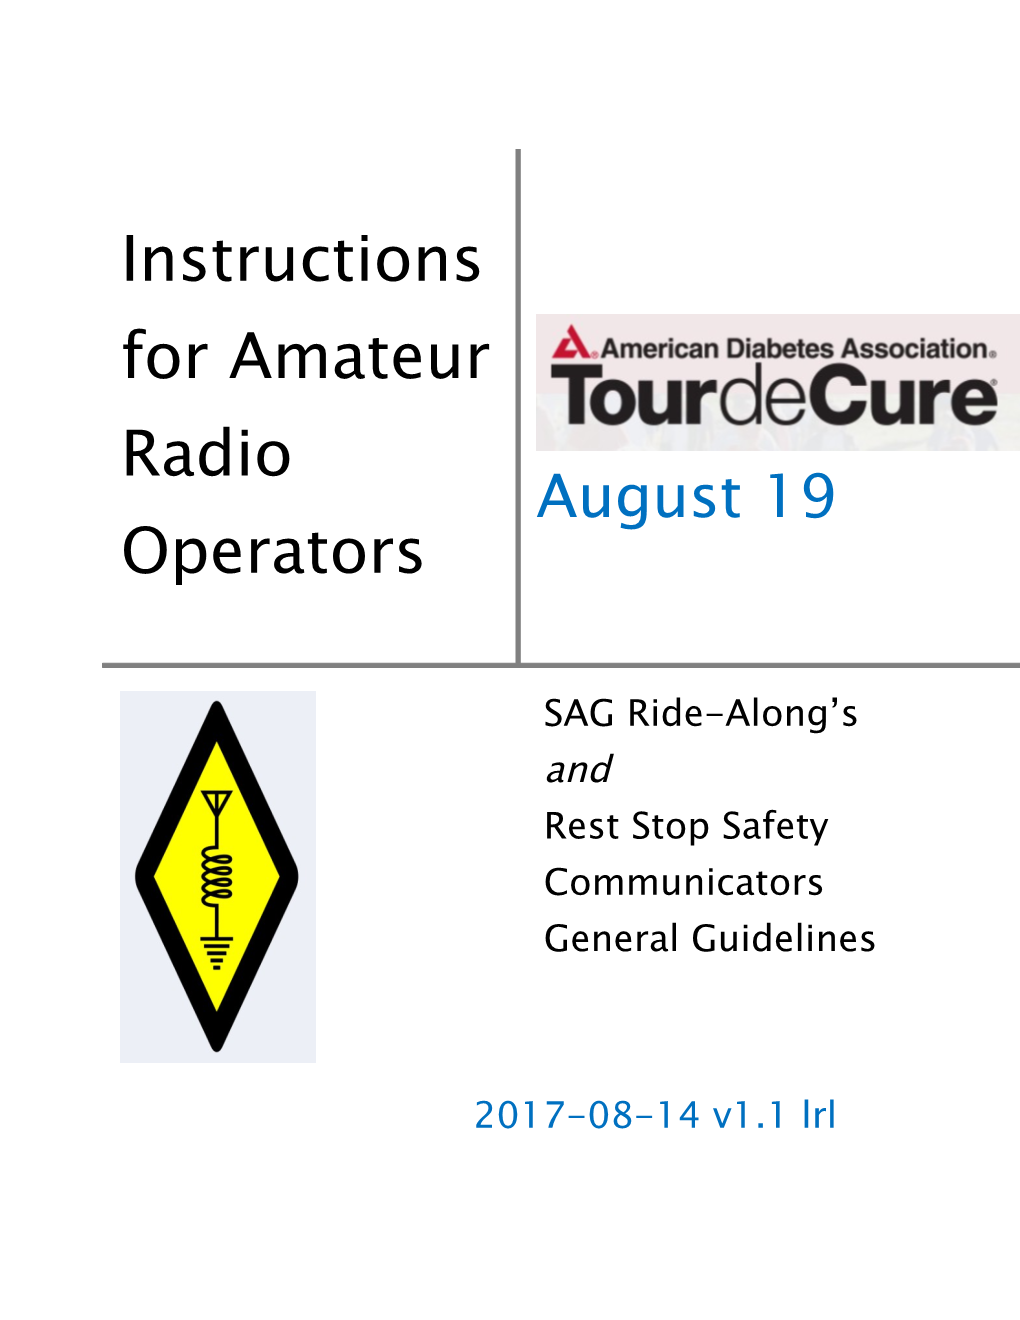 Instructions for Amateur Radio Operators